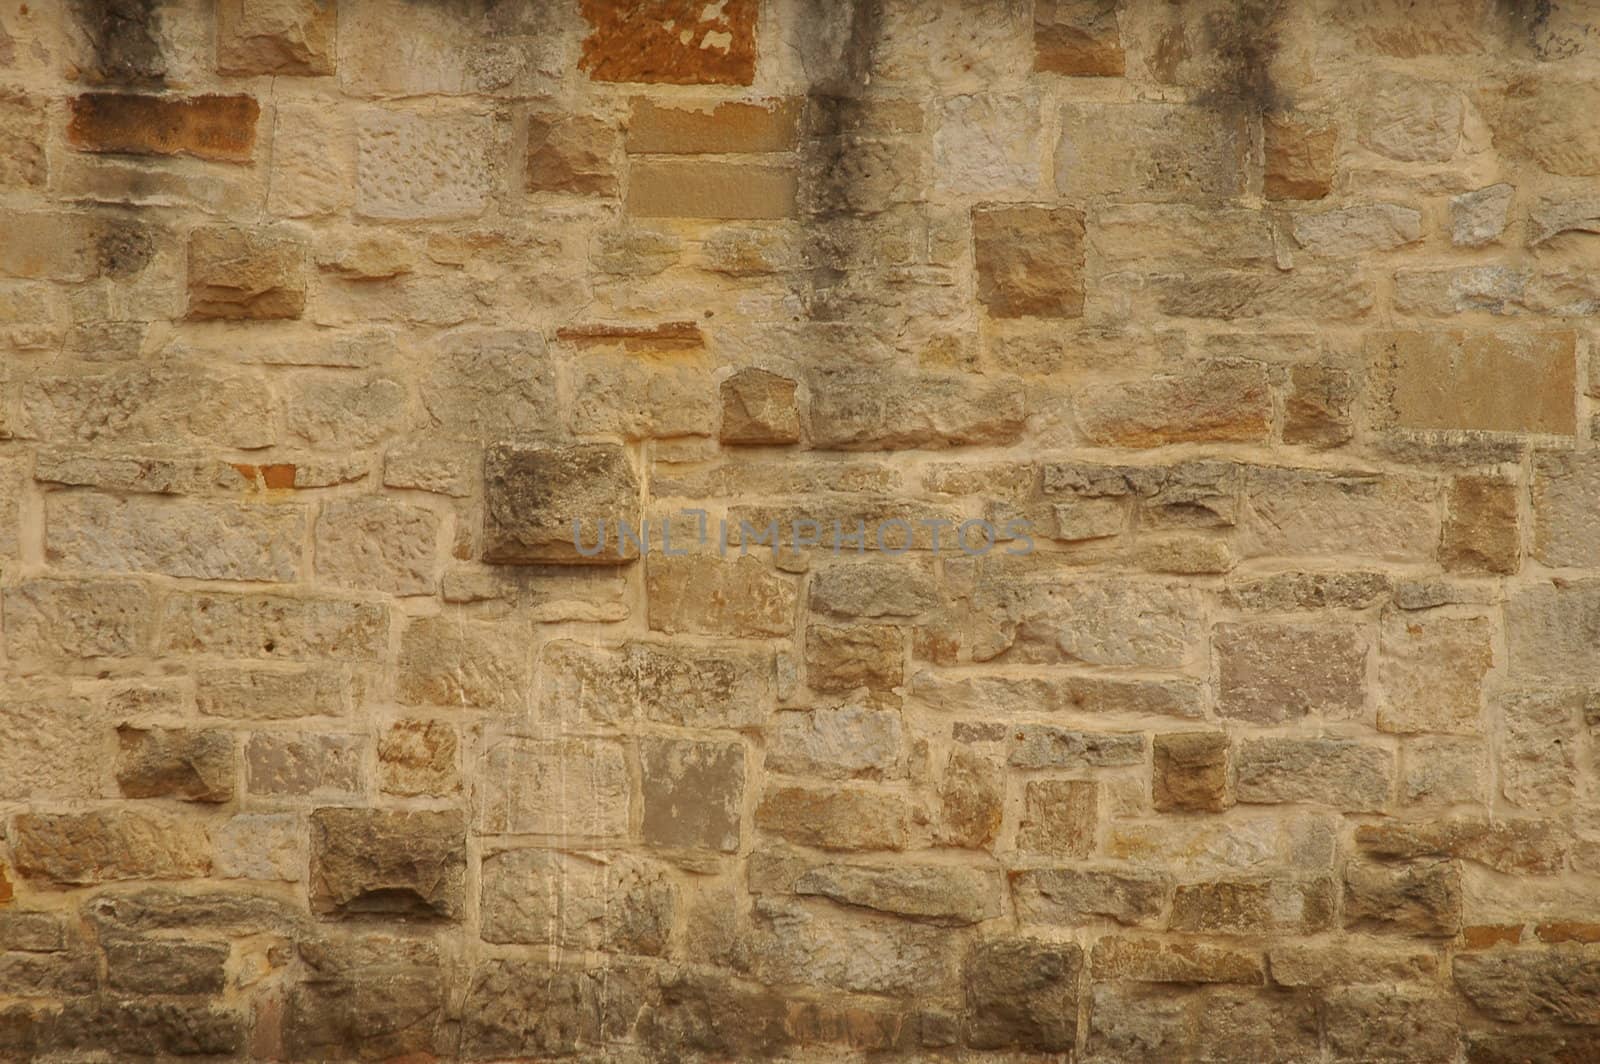 odl brick wall made of stone blocks, belongs to barracks in sydney